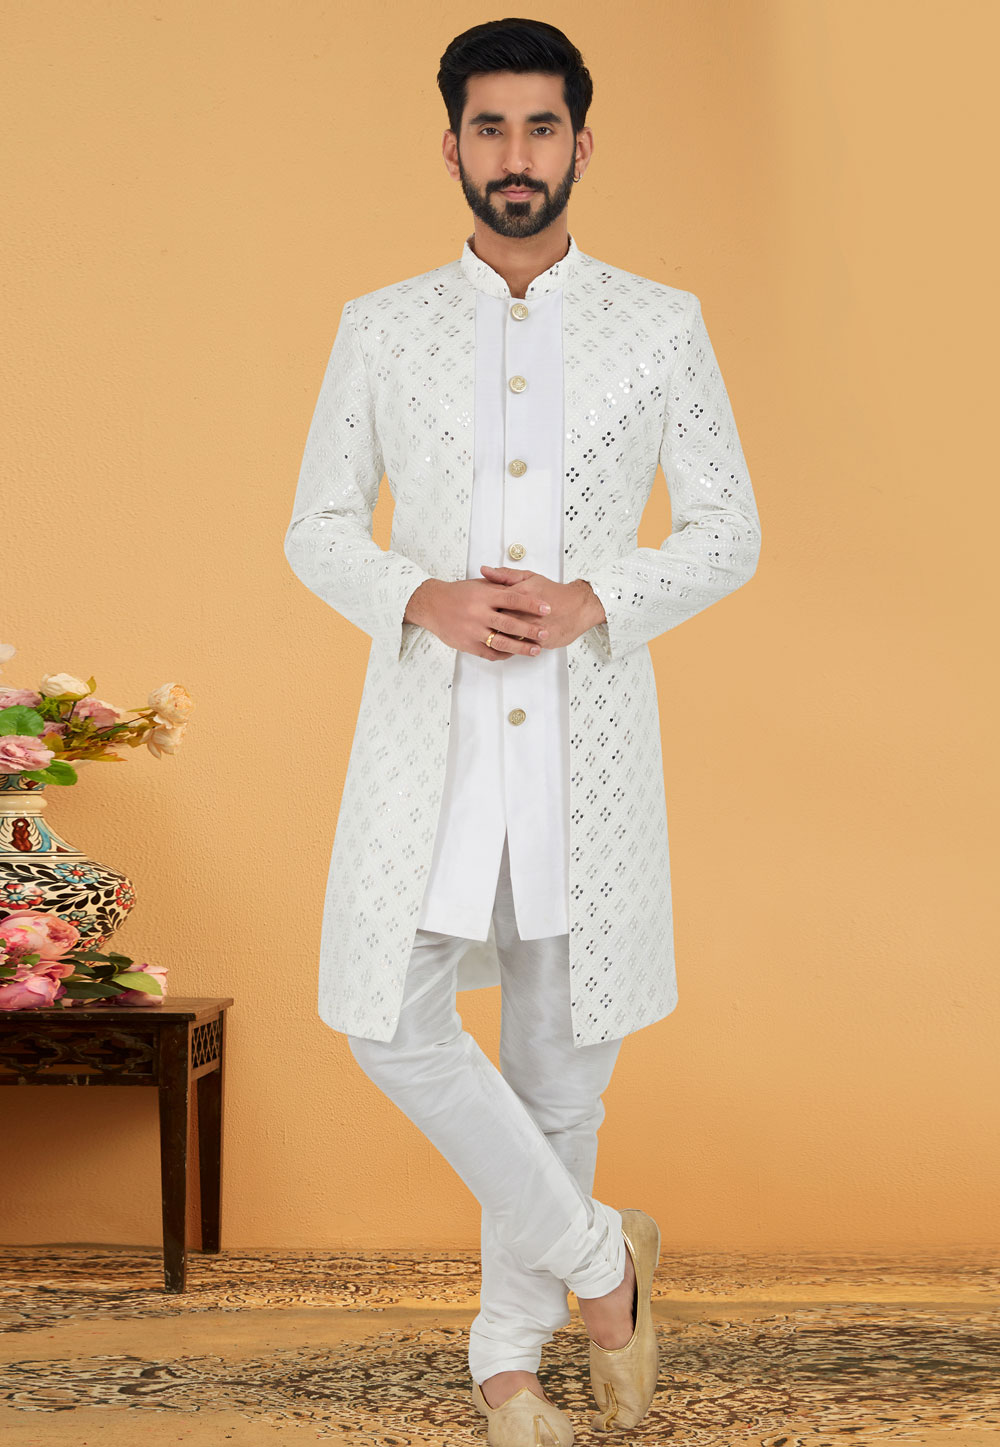 Golden Wedding Wear Indo western dresses mens at best price in New Delhi |  ID: 21840633833